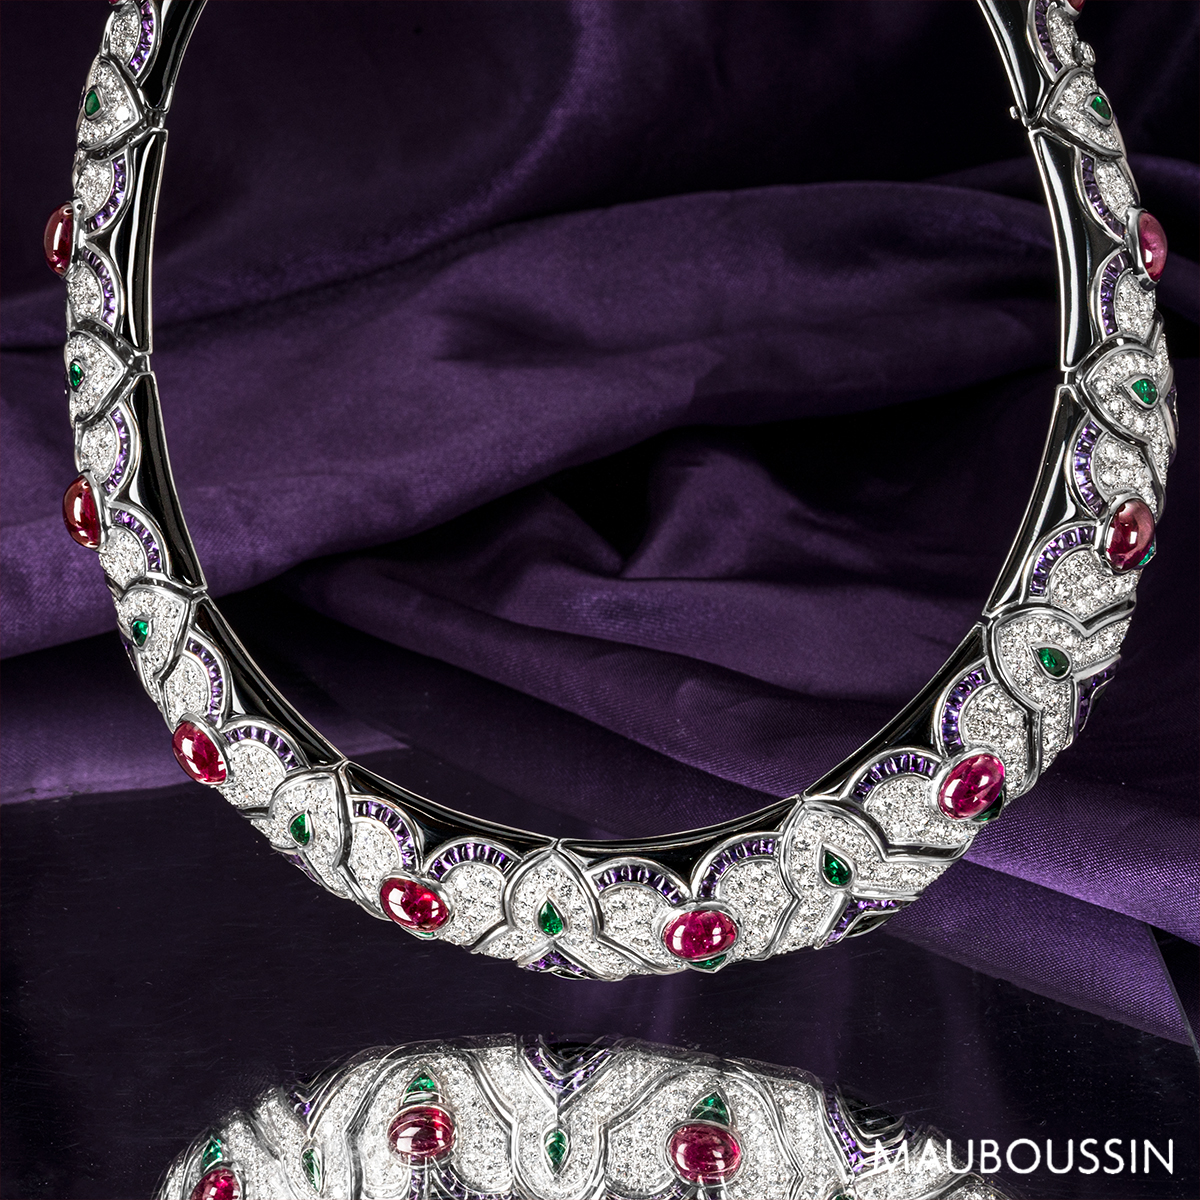 Mauboussin White Gold Multi-Gemstone & Diamond Necklace